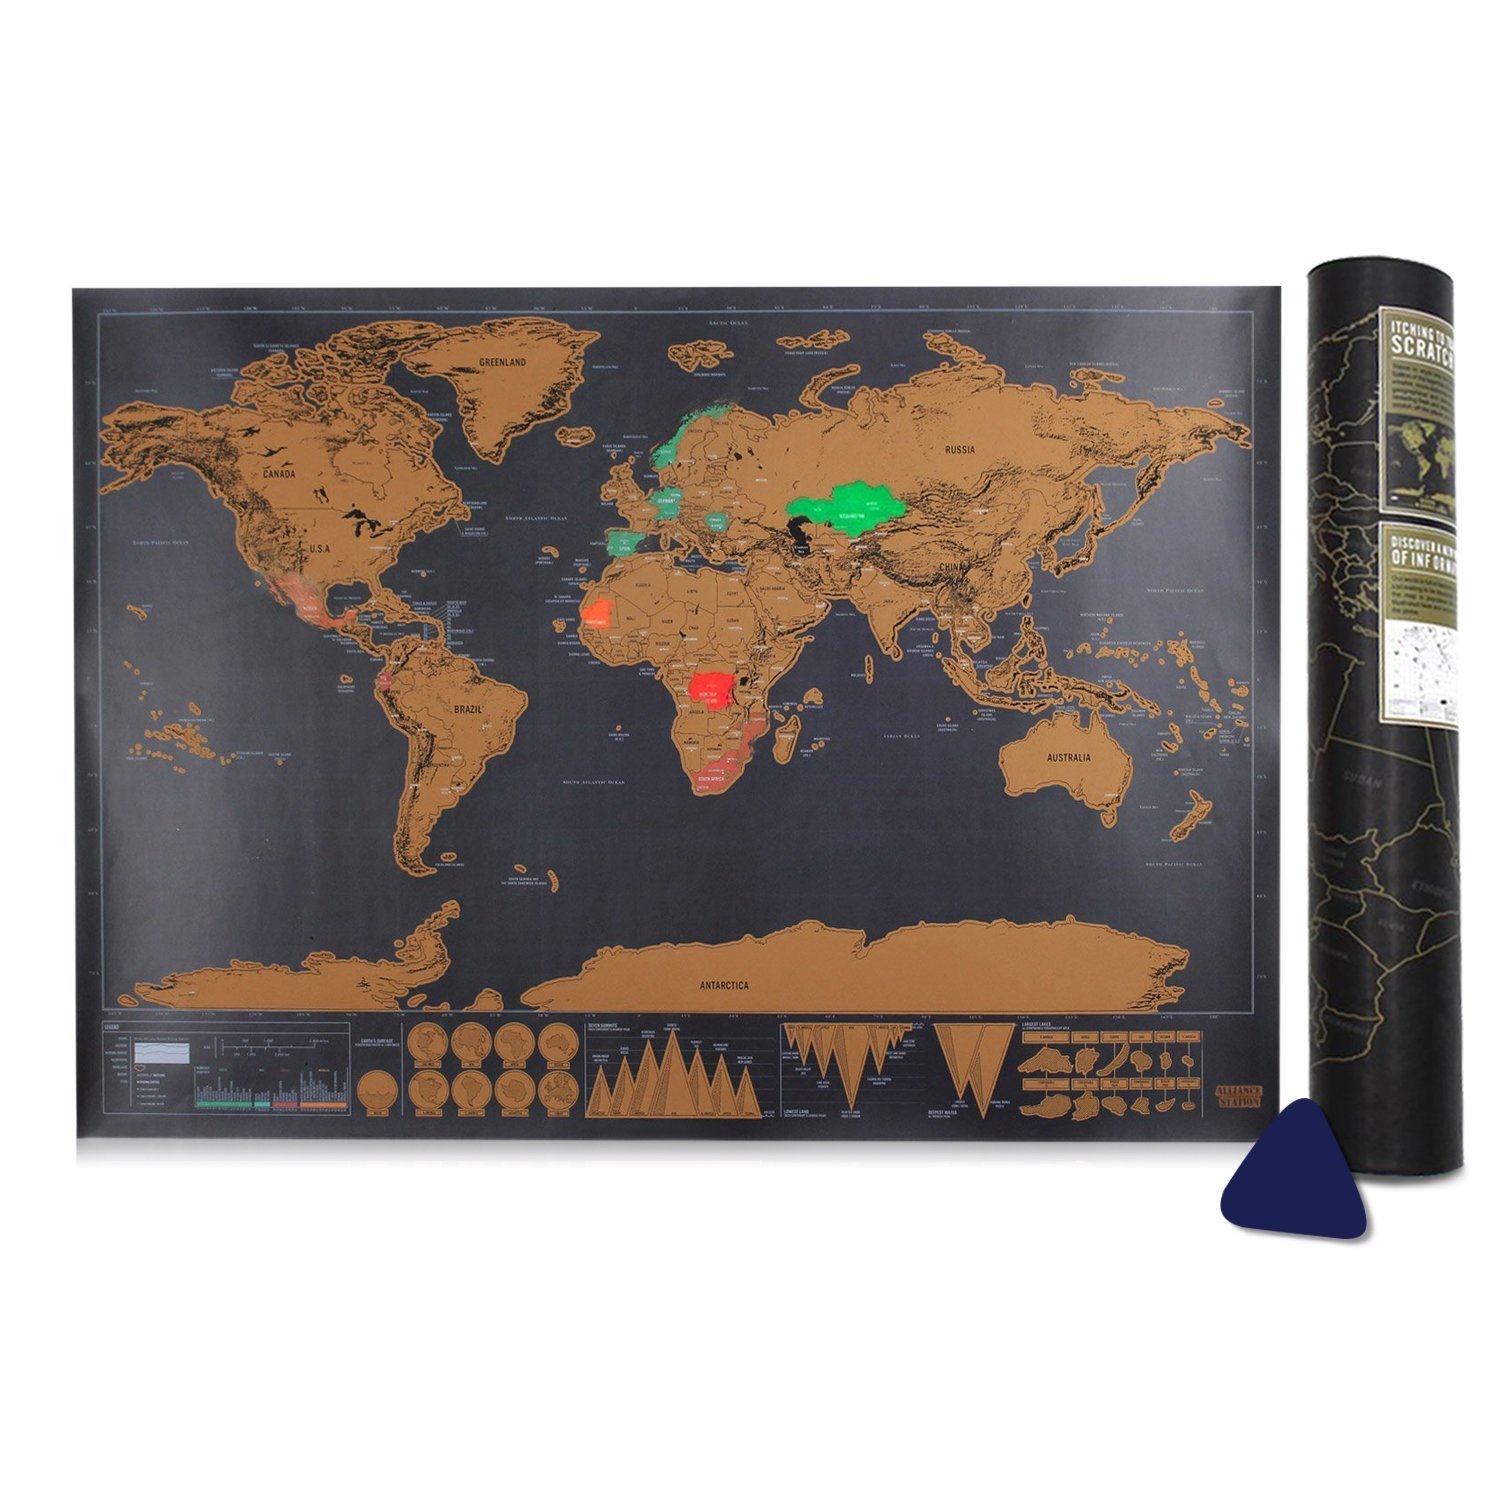 Discovery Map Carta para Rascar Regalo para Viajeros Mapamundi Rasca Plata Mapa Mundi Rascar Detallado Mapa del Mundo para Raspar Grande 88 x 62 cm Scratch off World Travel Map Poster 